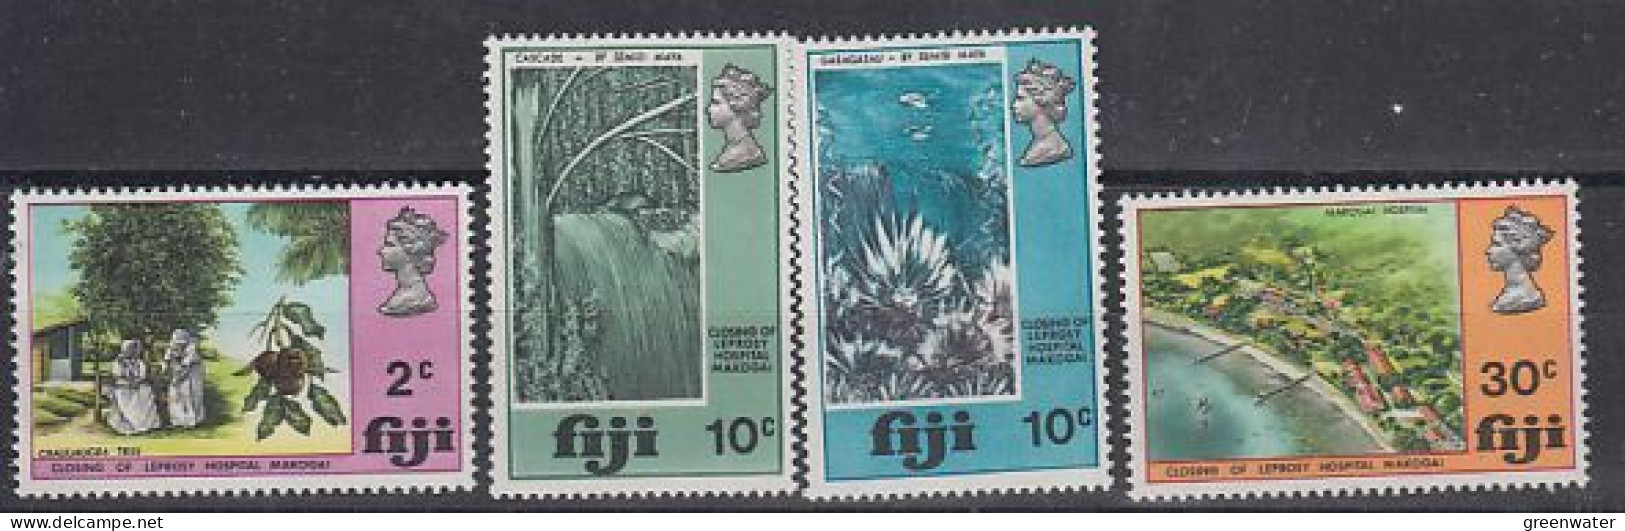 Fidji 1970 Closing Of Lepra House 4v  ** Mnh (59837) - Fidji (1970-...)